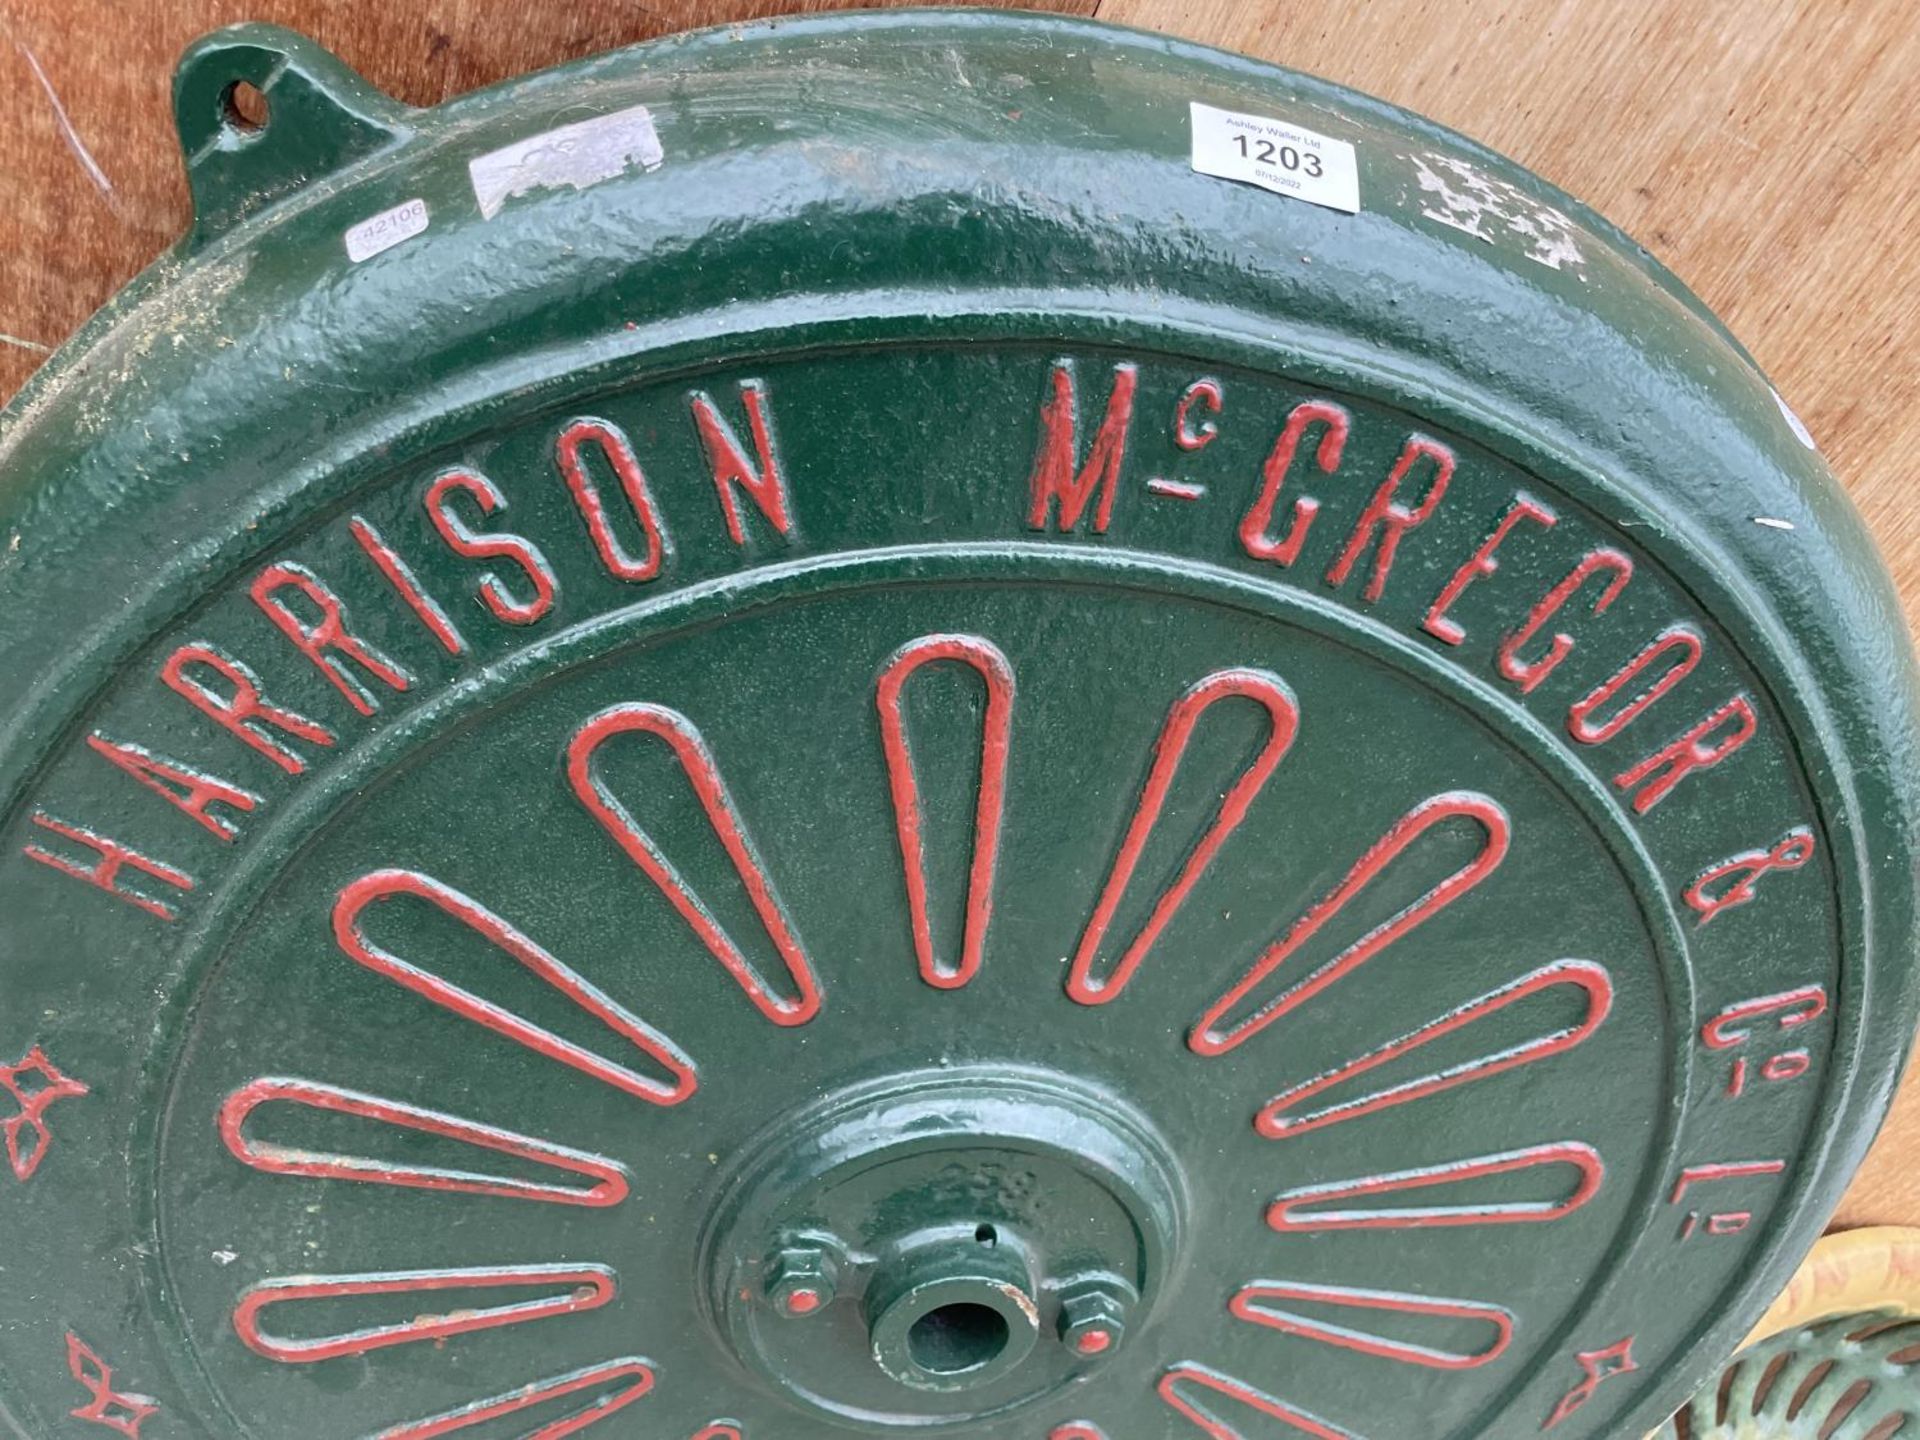 A BELIEVED ORIGINAL 'HARRISON MCGREGOR' IMPLEMENT PANEL SIGN - Image 2 of 2